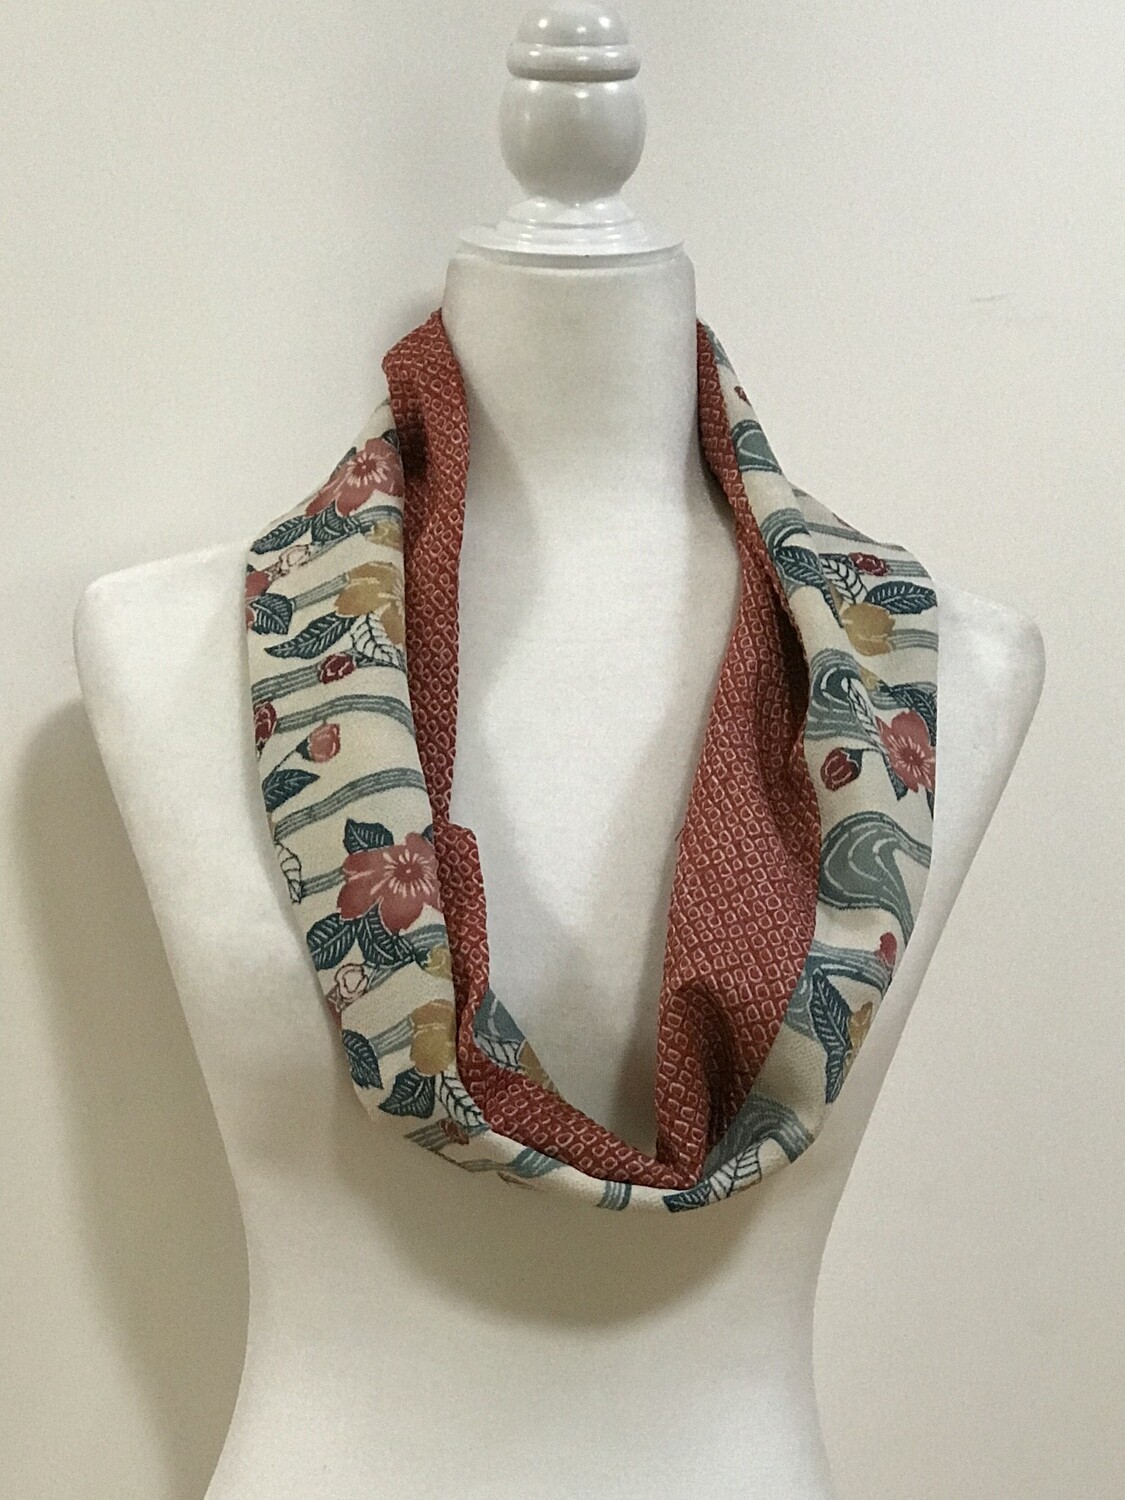 Single infinity scarf
8.5 x 38.5in